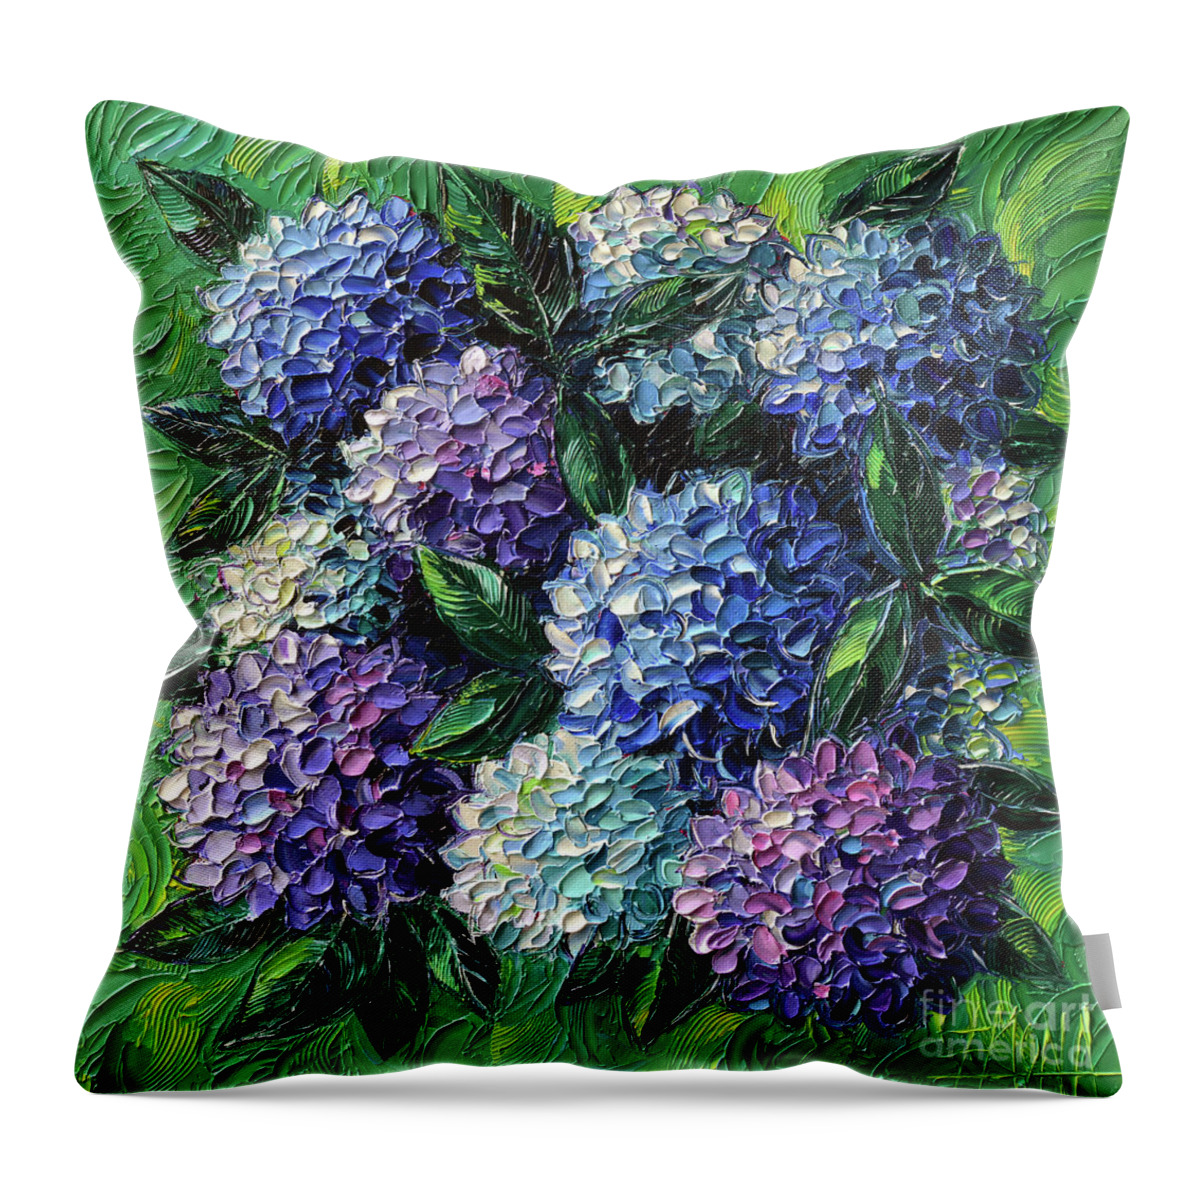 Hydrangeas Throw Pillow featuring the painting Blue And Purple Hydrangeas by Mona Edulesco